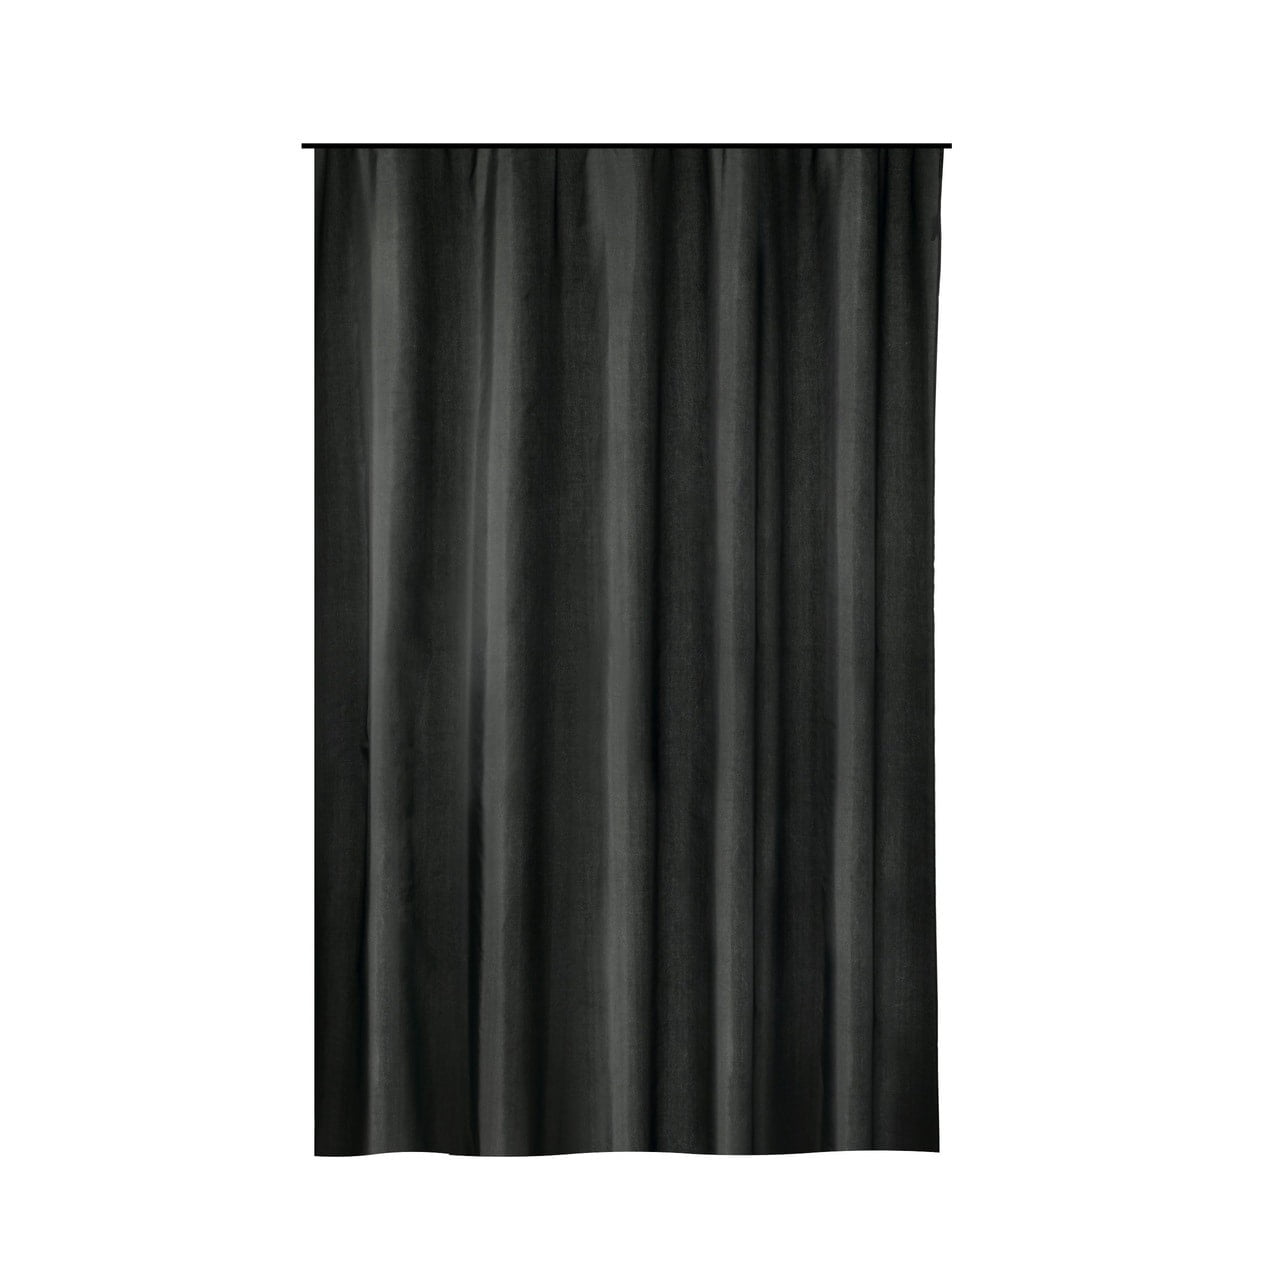 Gamma Extra Long Shower Curtain 78 x 72 Inch Black Fabric - Walmart.com